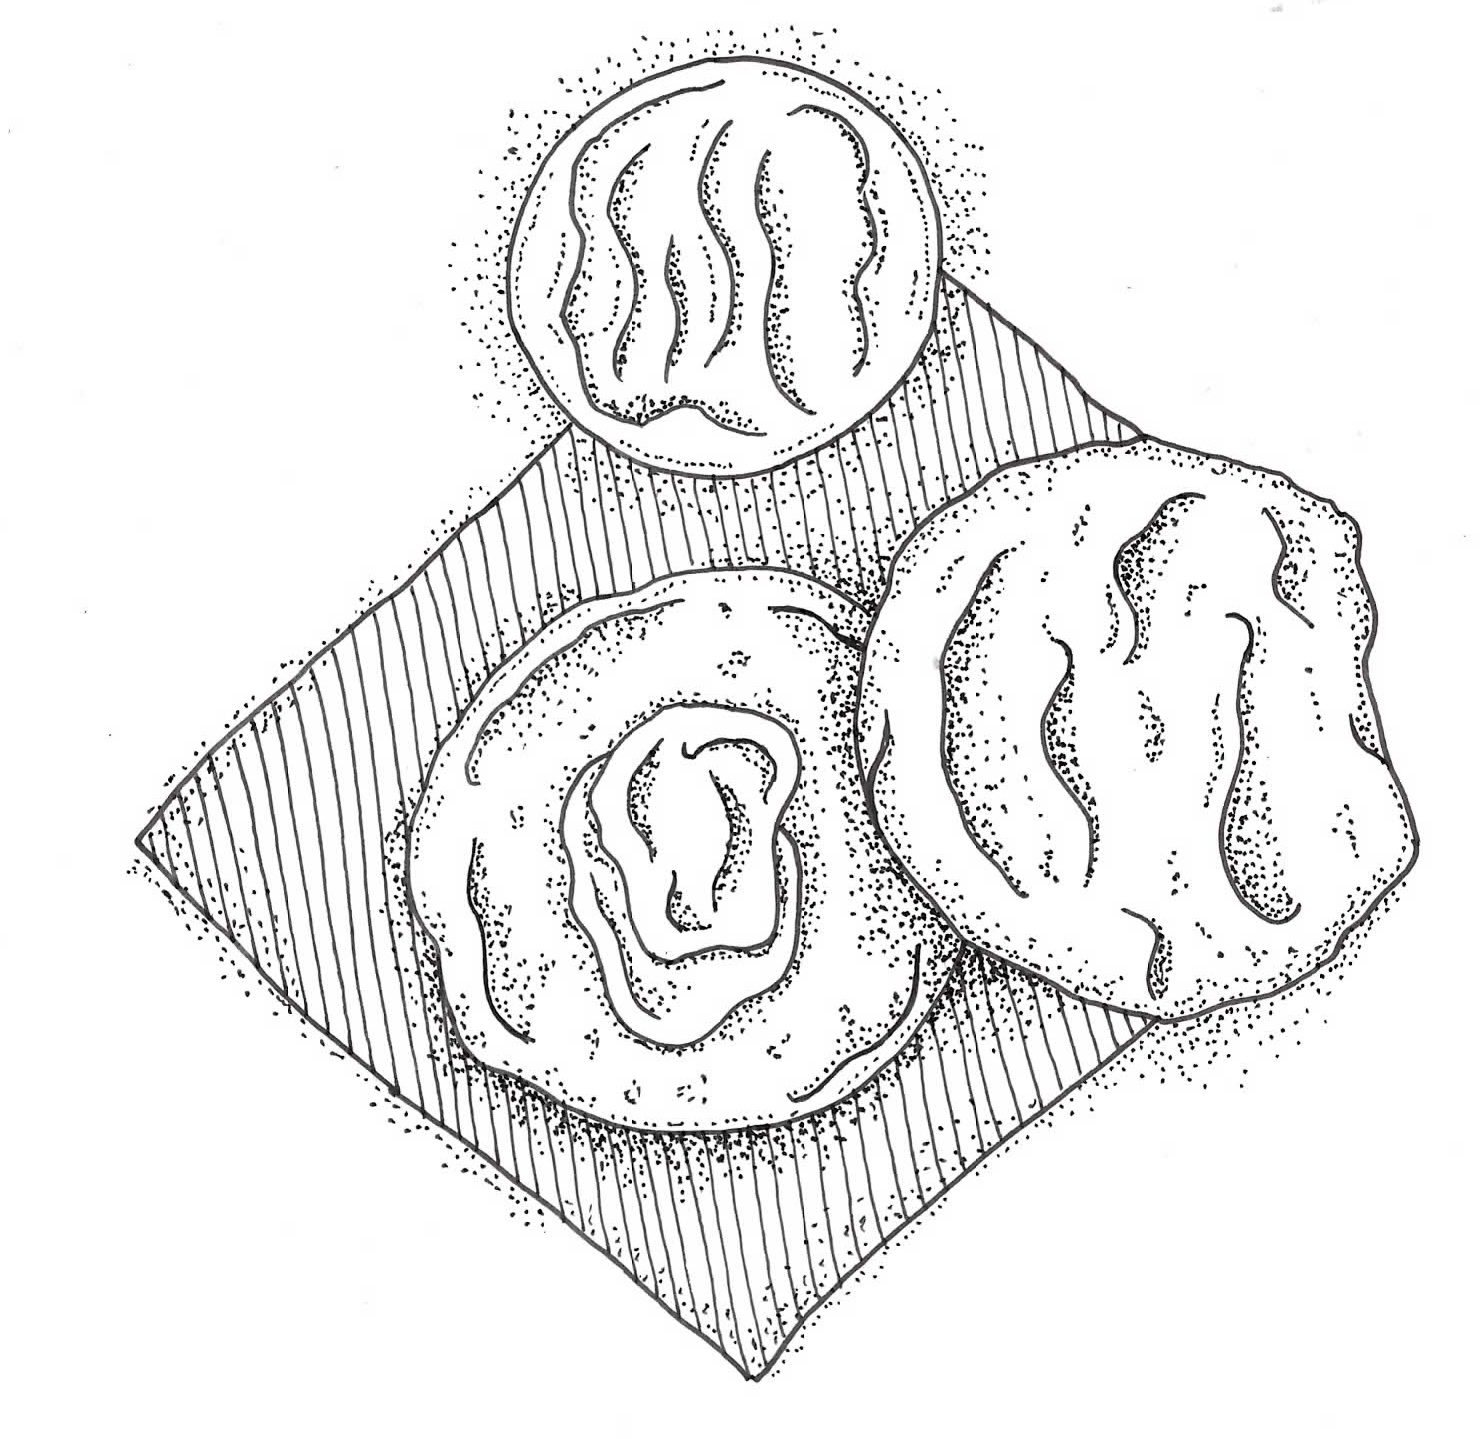 Drop biscuit illustration